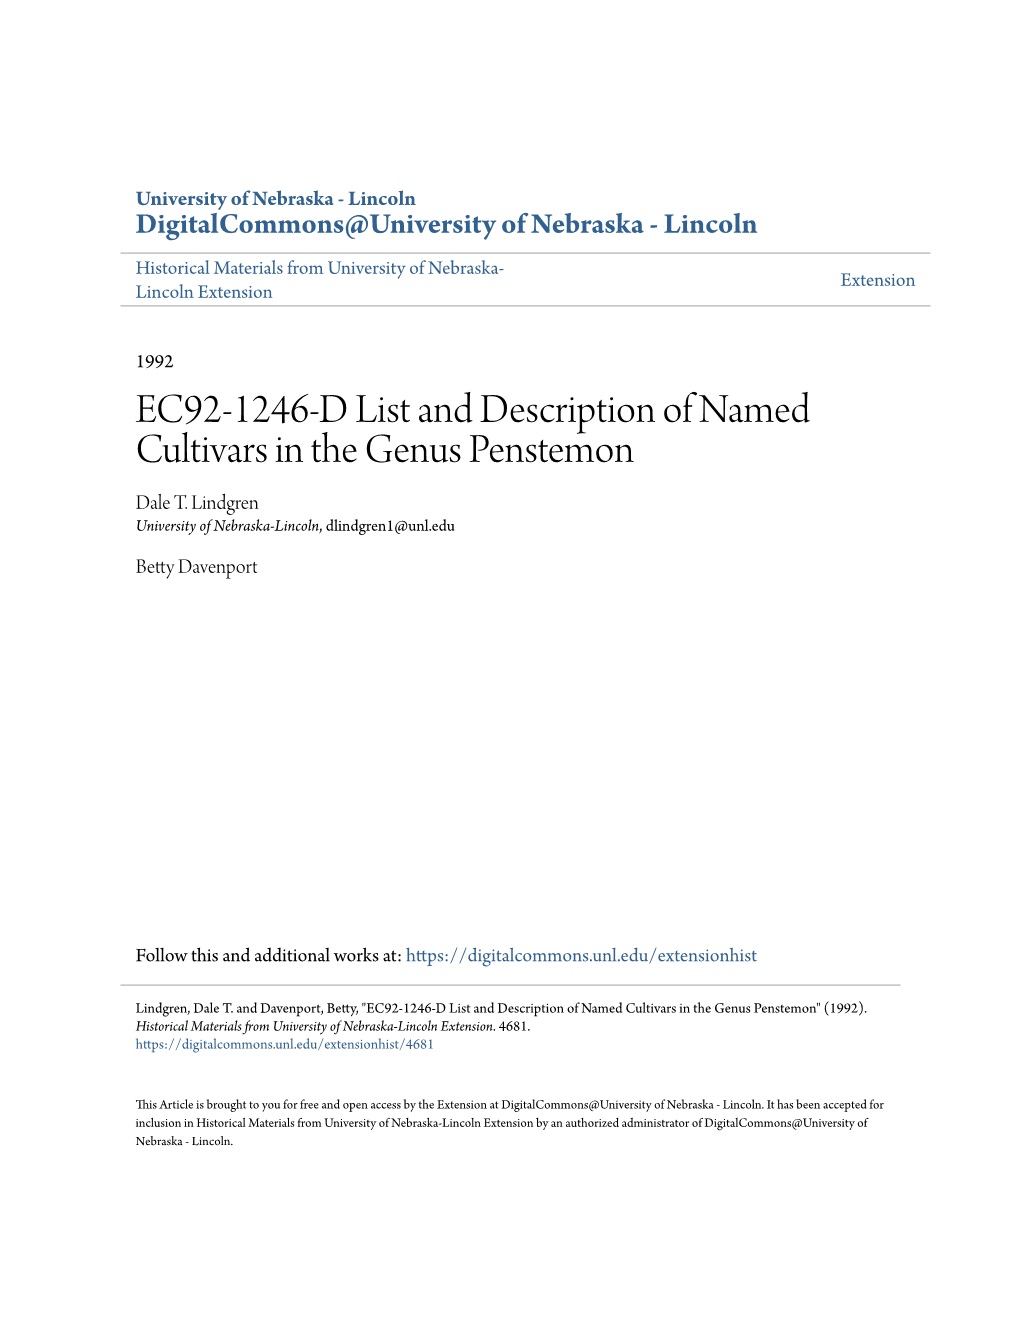 EC92-1246-D List and Description of Named Cultivars in the Genus Penstemon Dale T